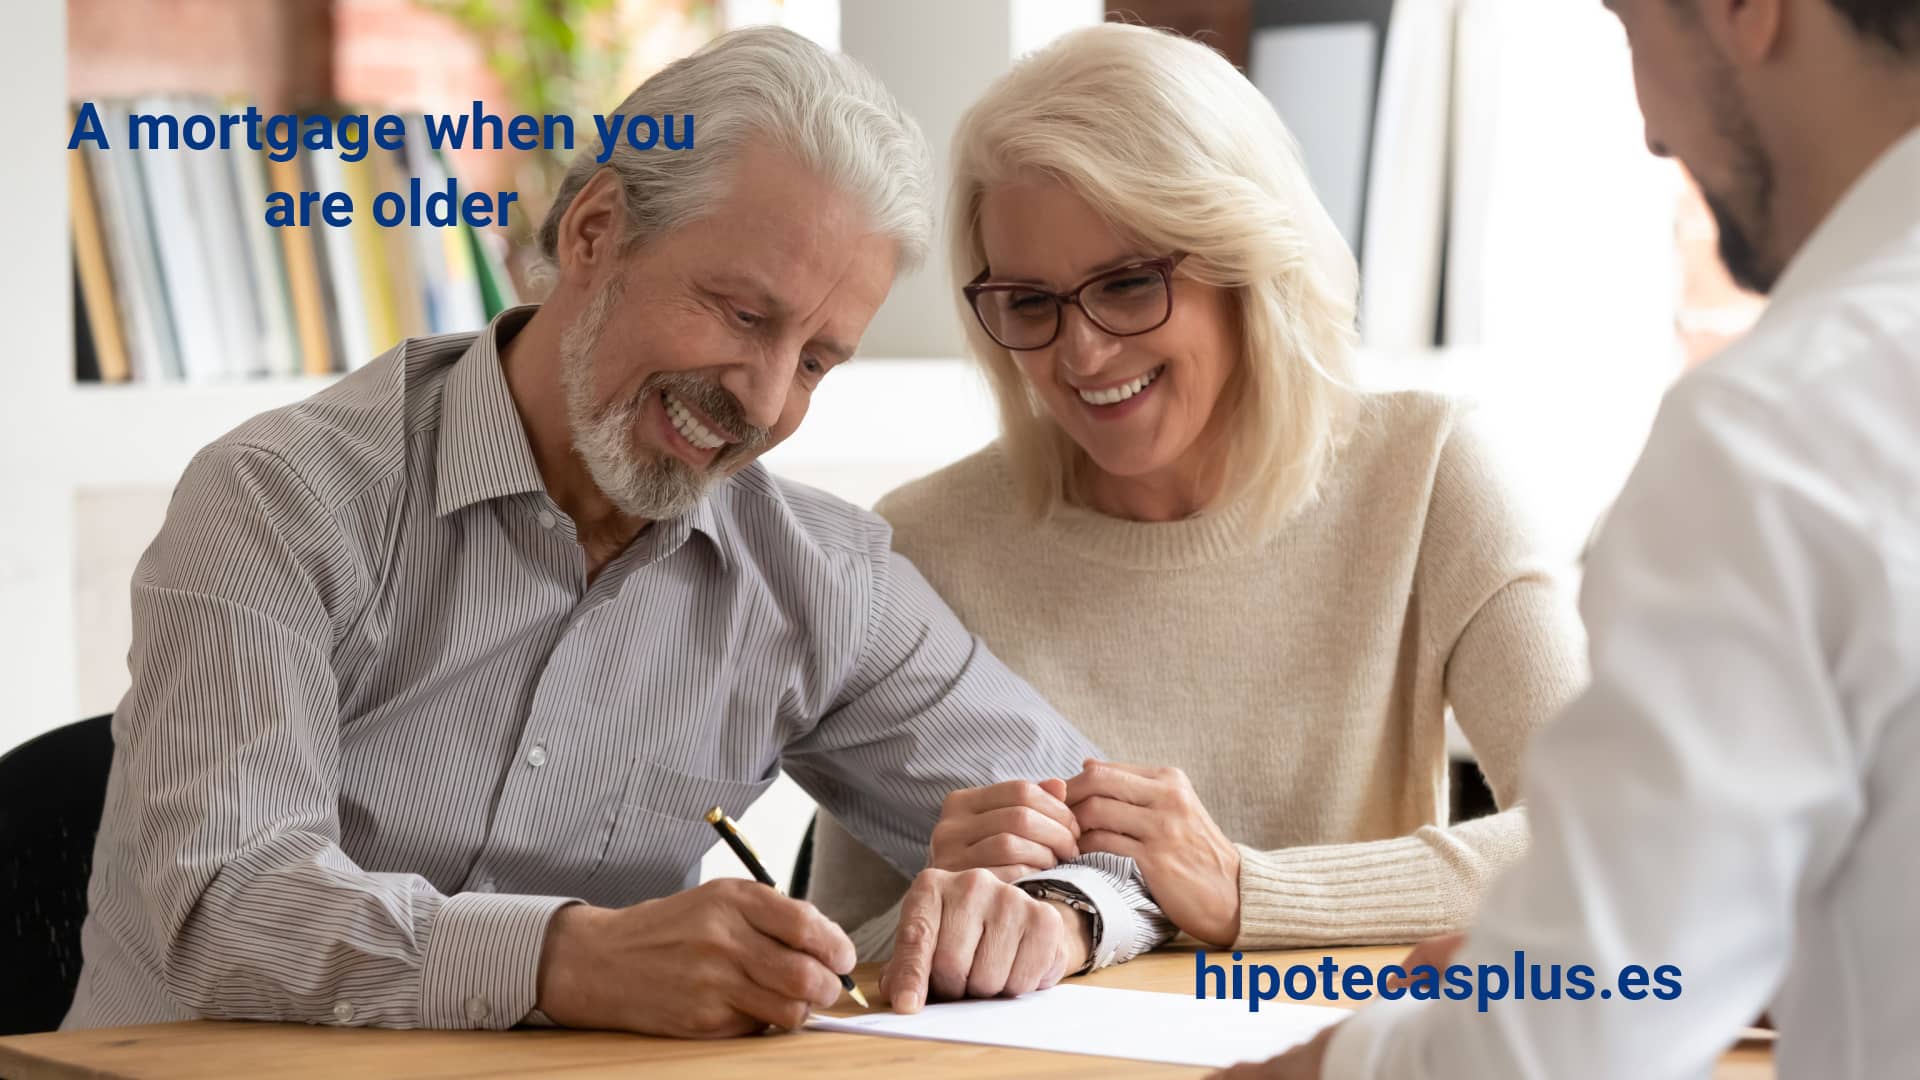 https://www.hipotecasplus.es/wp-content/uploads/HipotecasPlus-A-mortgage-when-you-are-older-.jpg